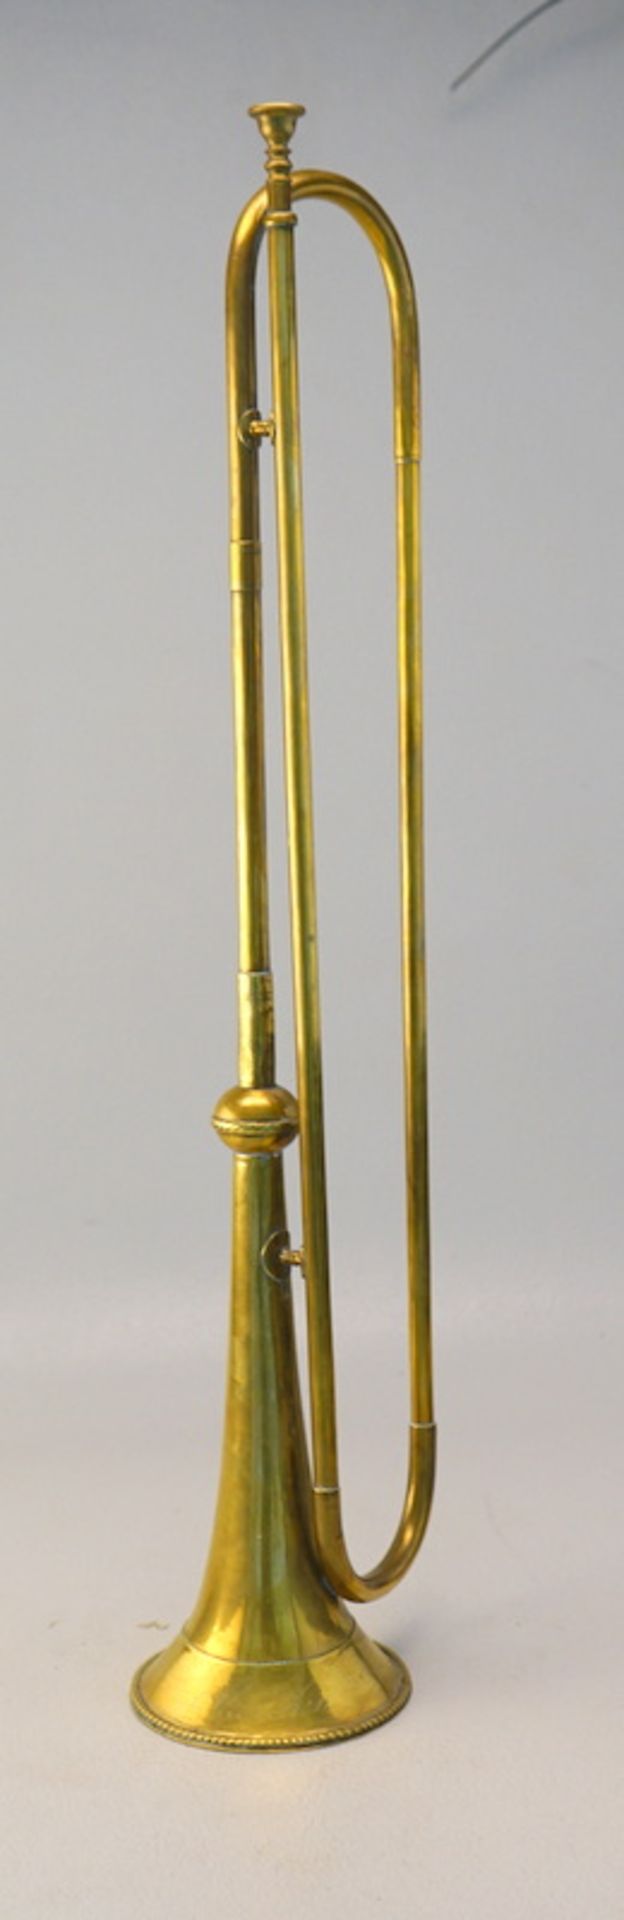 Saurle, Michael: Klassische Trompete von Michael Saurle, München ca. 1820